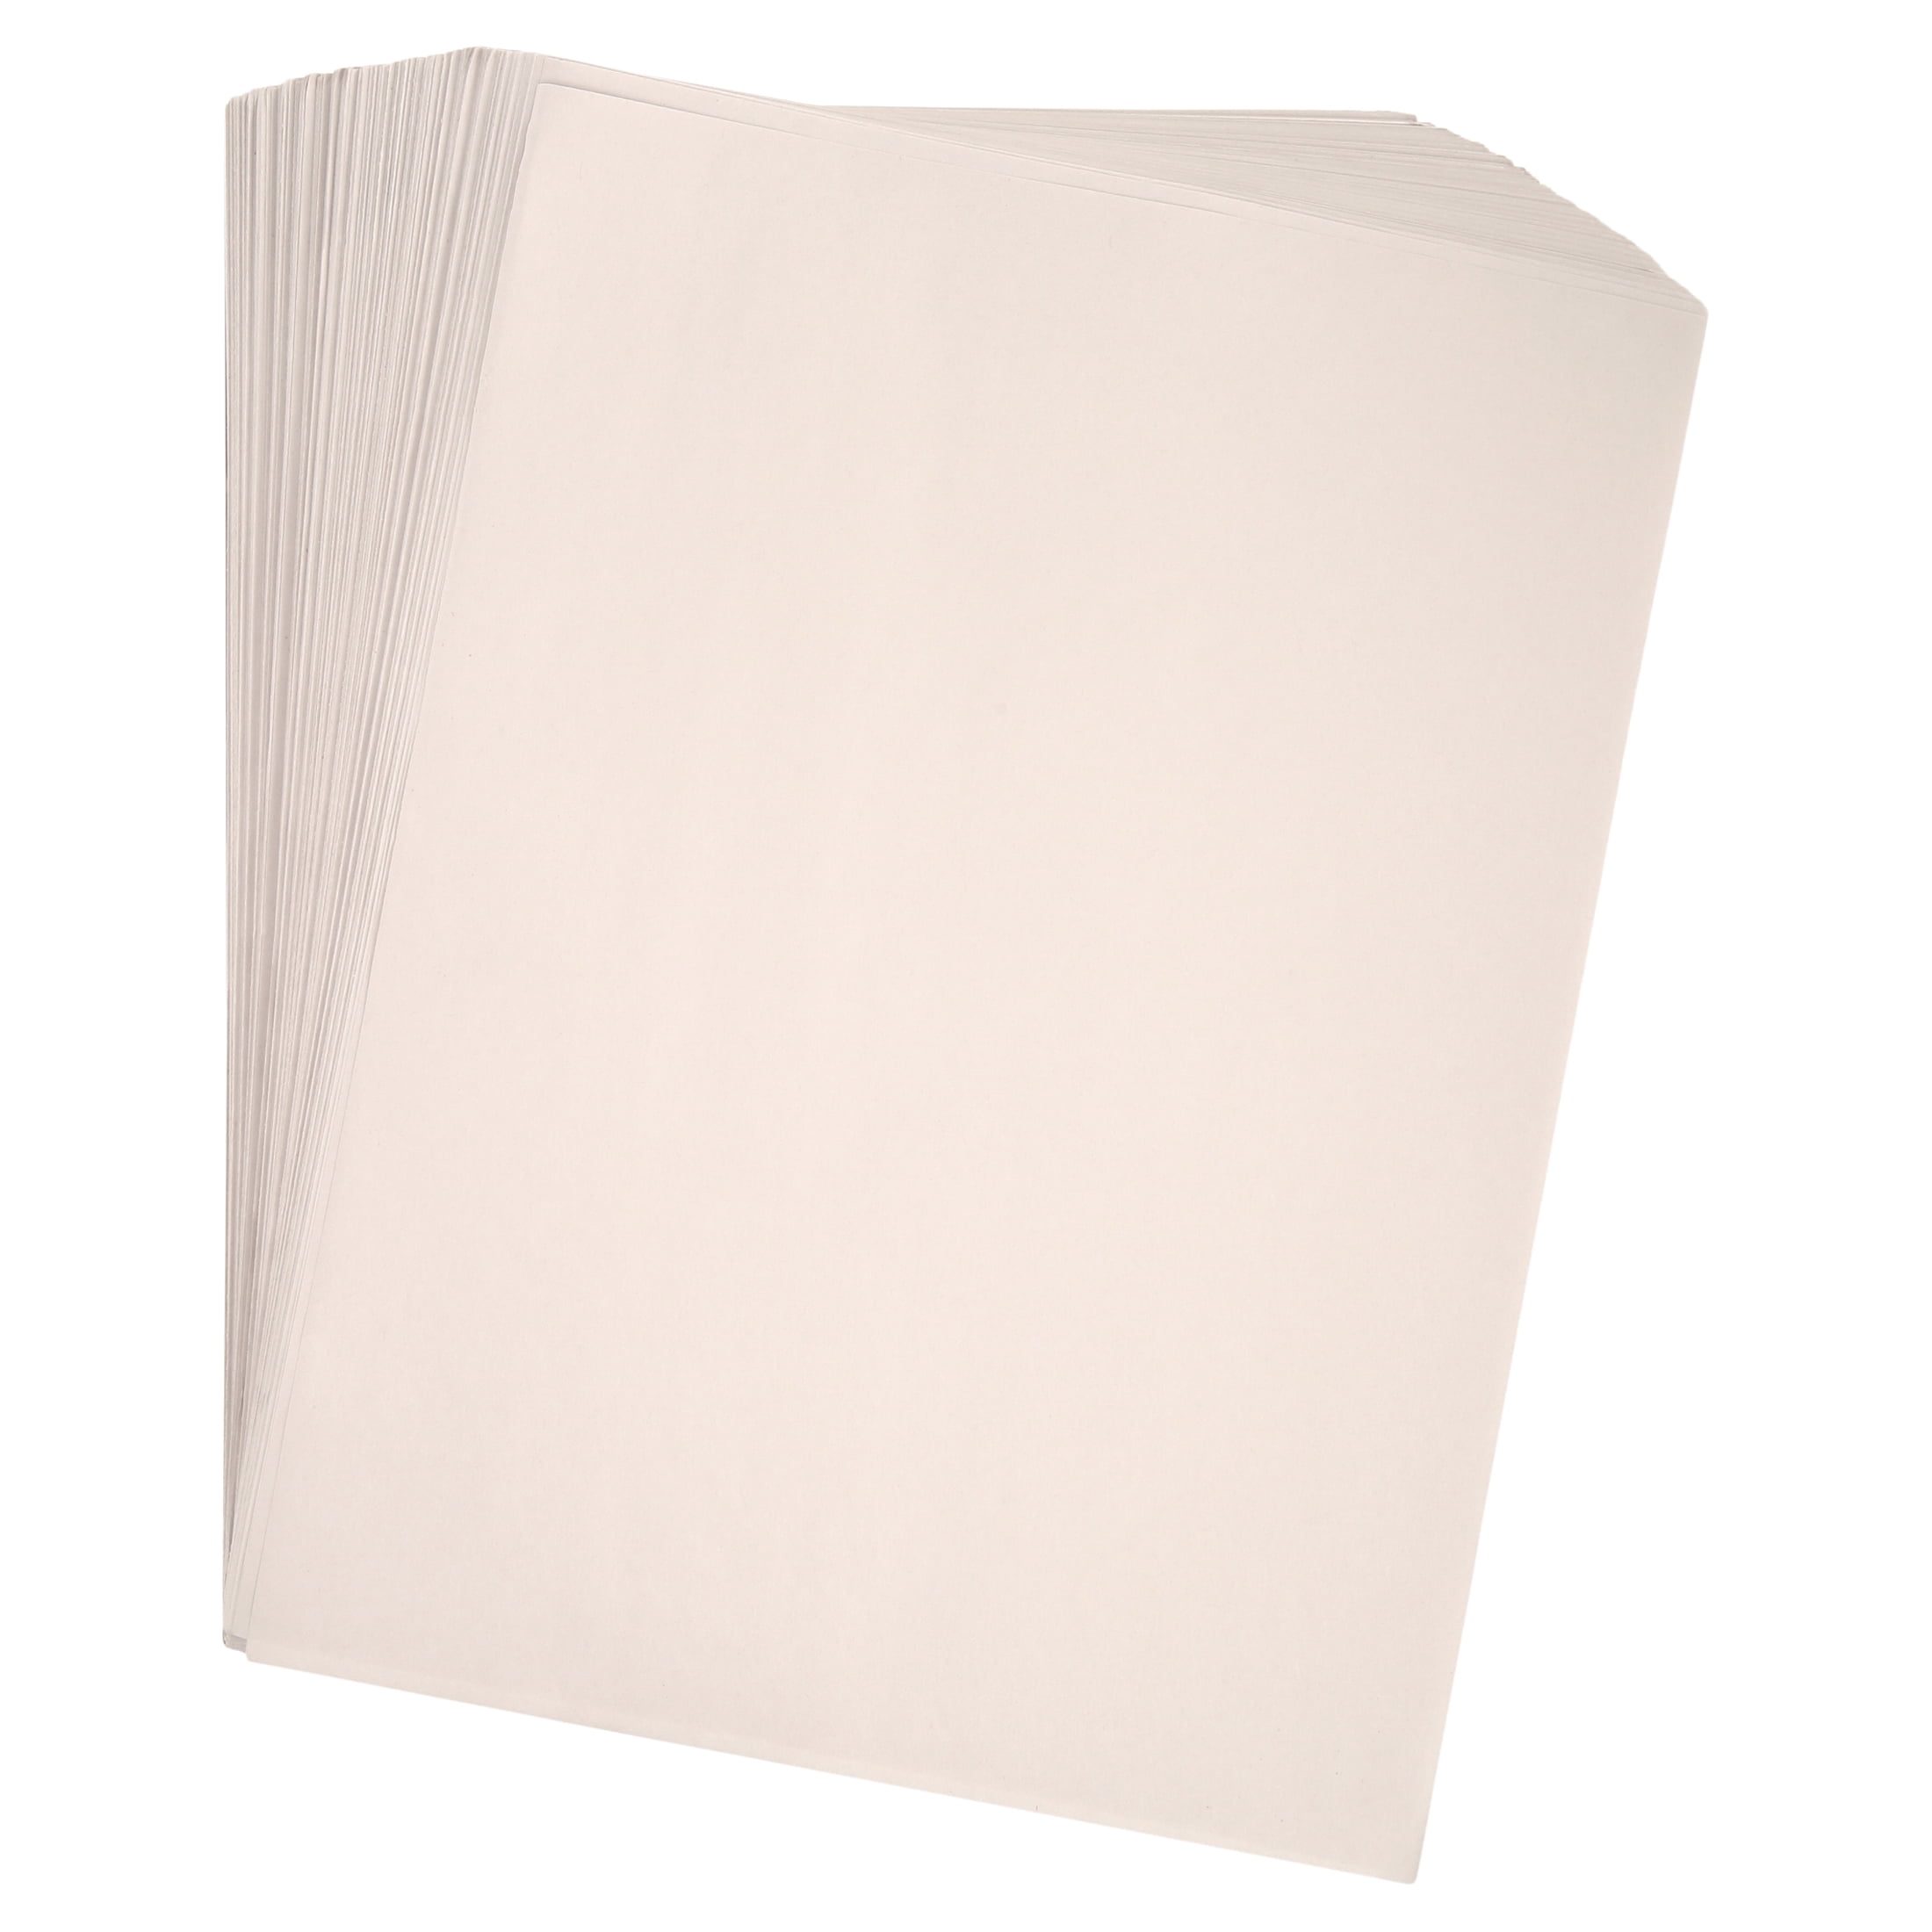 Pacon White Newsprint, 30lb, 18 x 24, White, 500-Pack